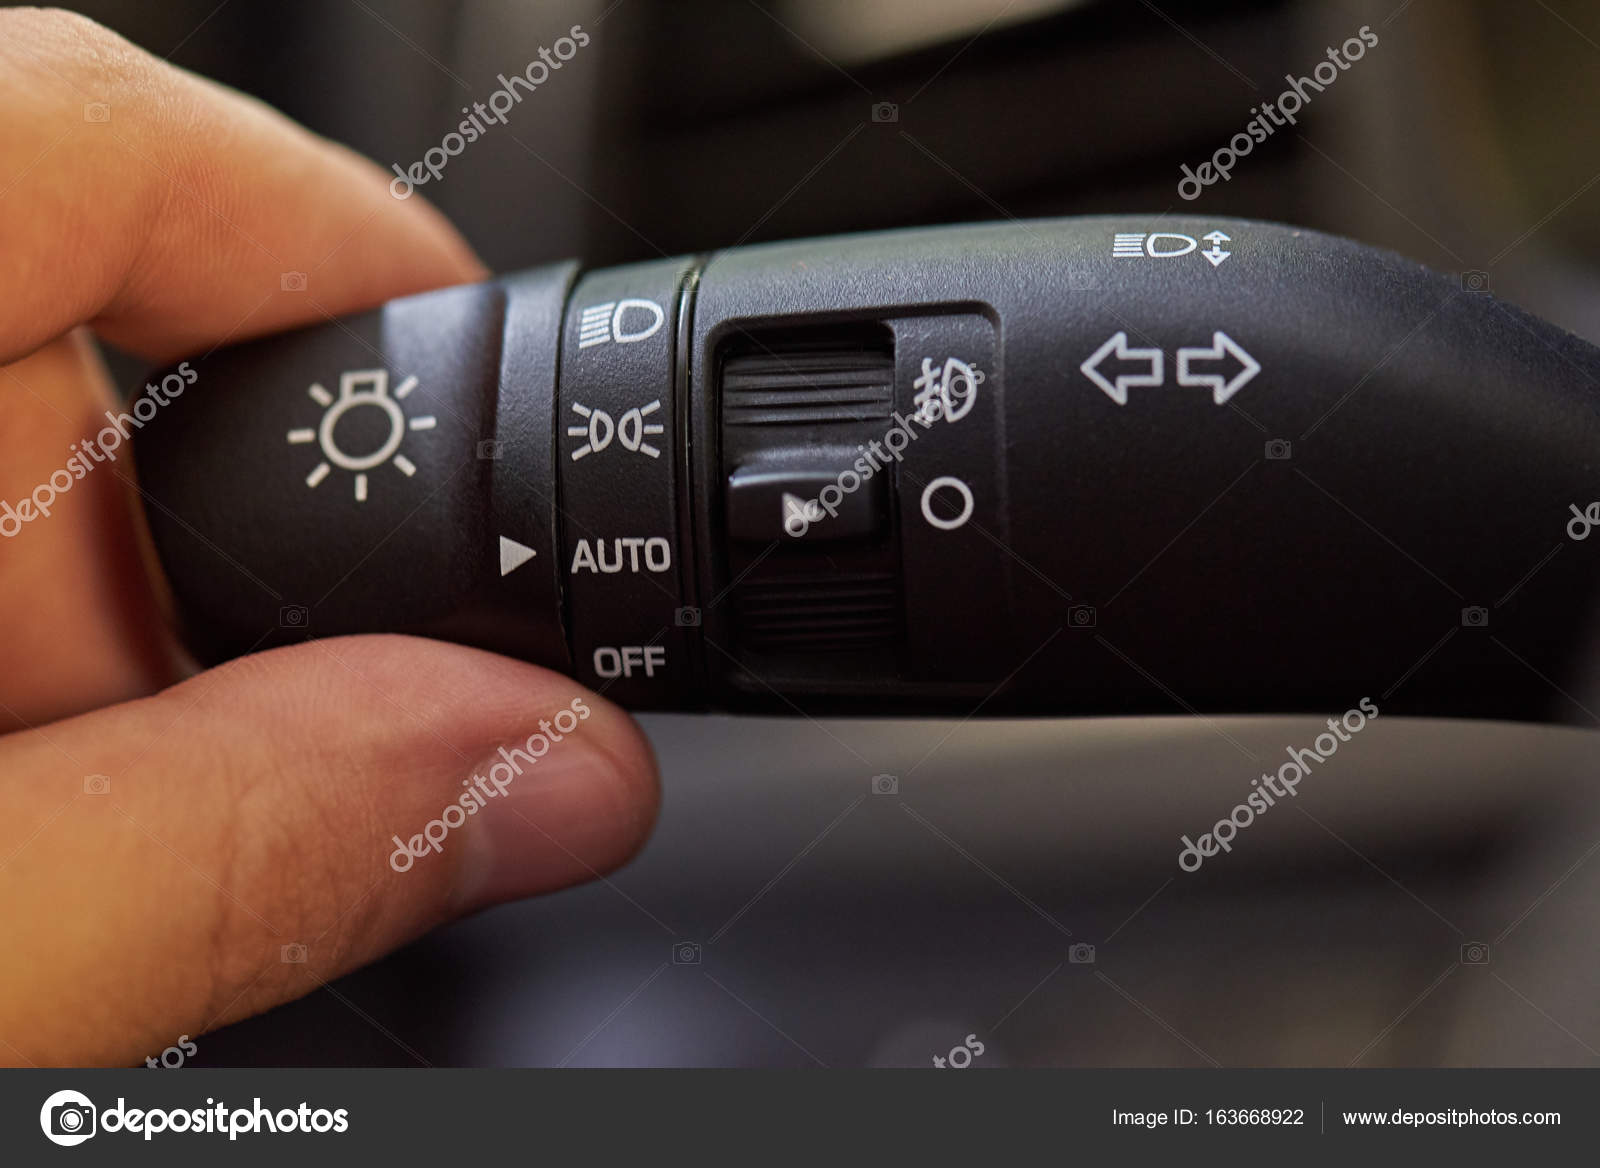 https://st3.depositphotos.com/1006241/16366/i/1600/depositphotos_163668922-stock-photo-car-turn-light-switch-handle.jpg